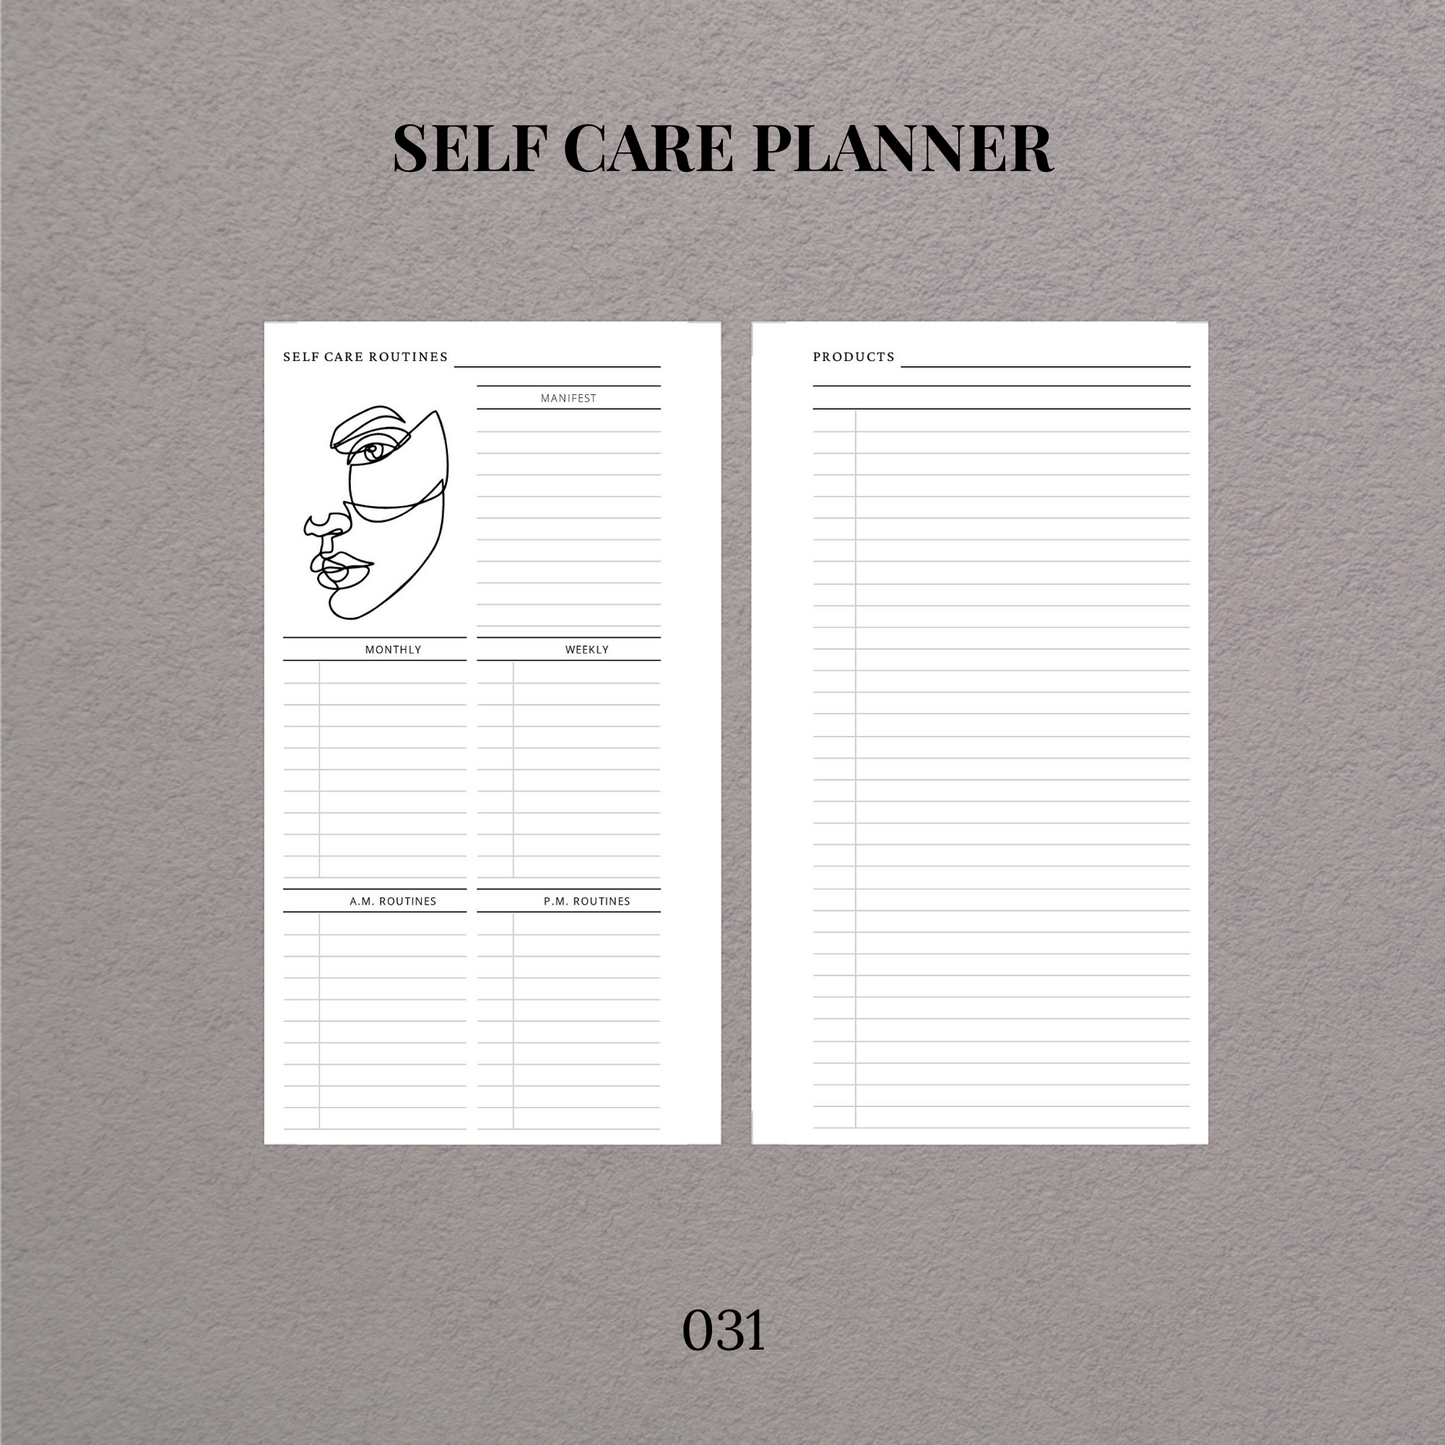 Self care planner - 031